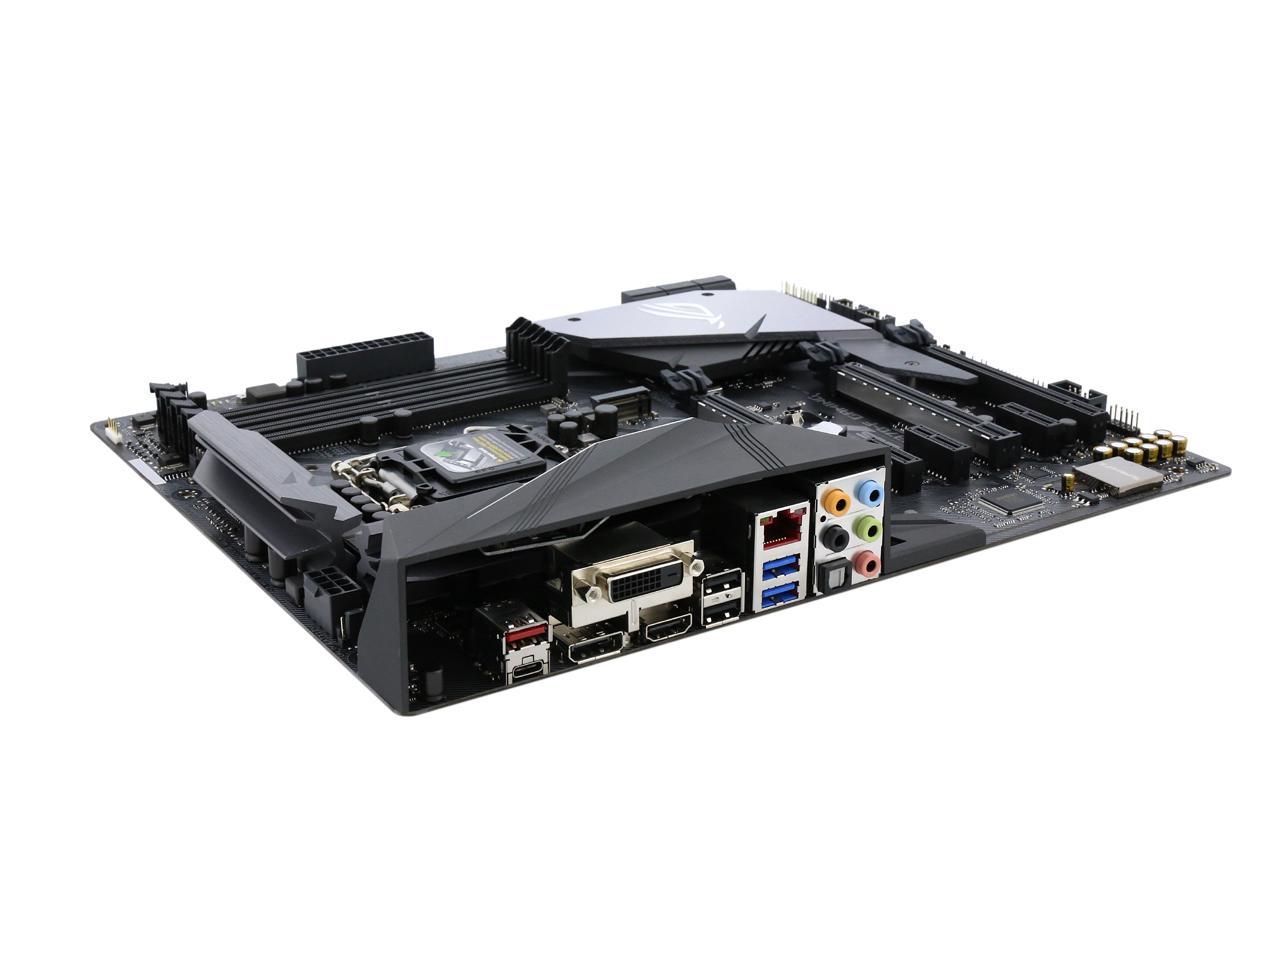 Asus Rog Strix Z370 F Gaming Lga 1151 300 Series Atx Intel Motherboard Newegg Com